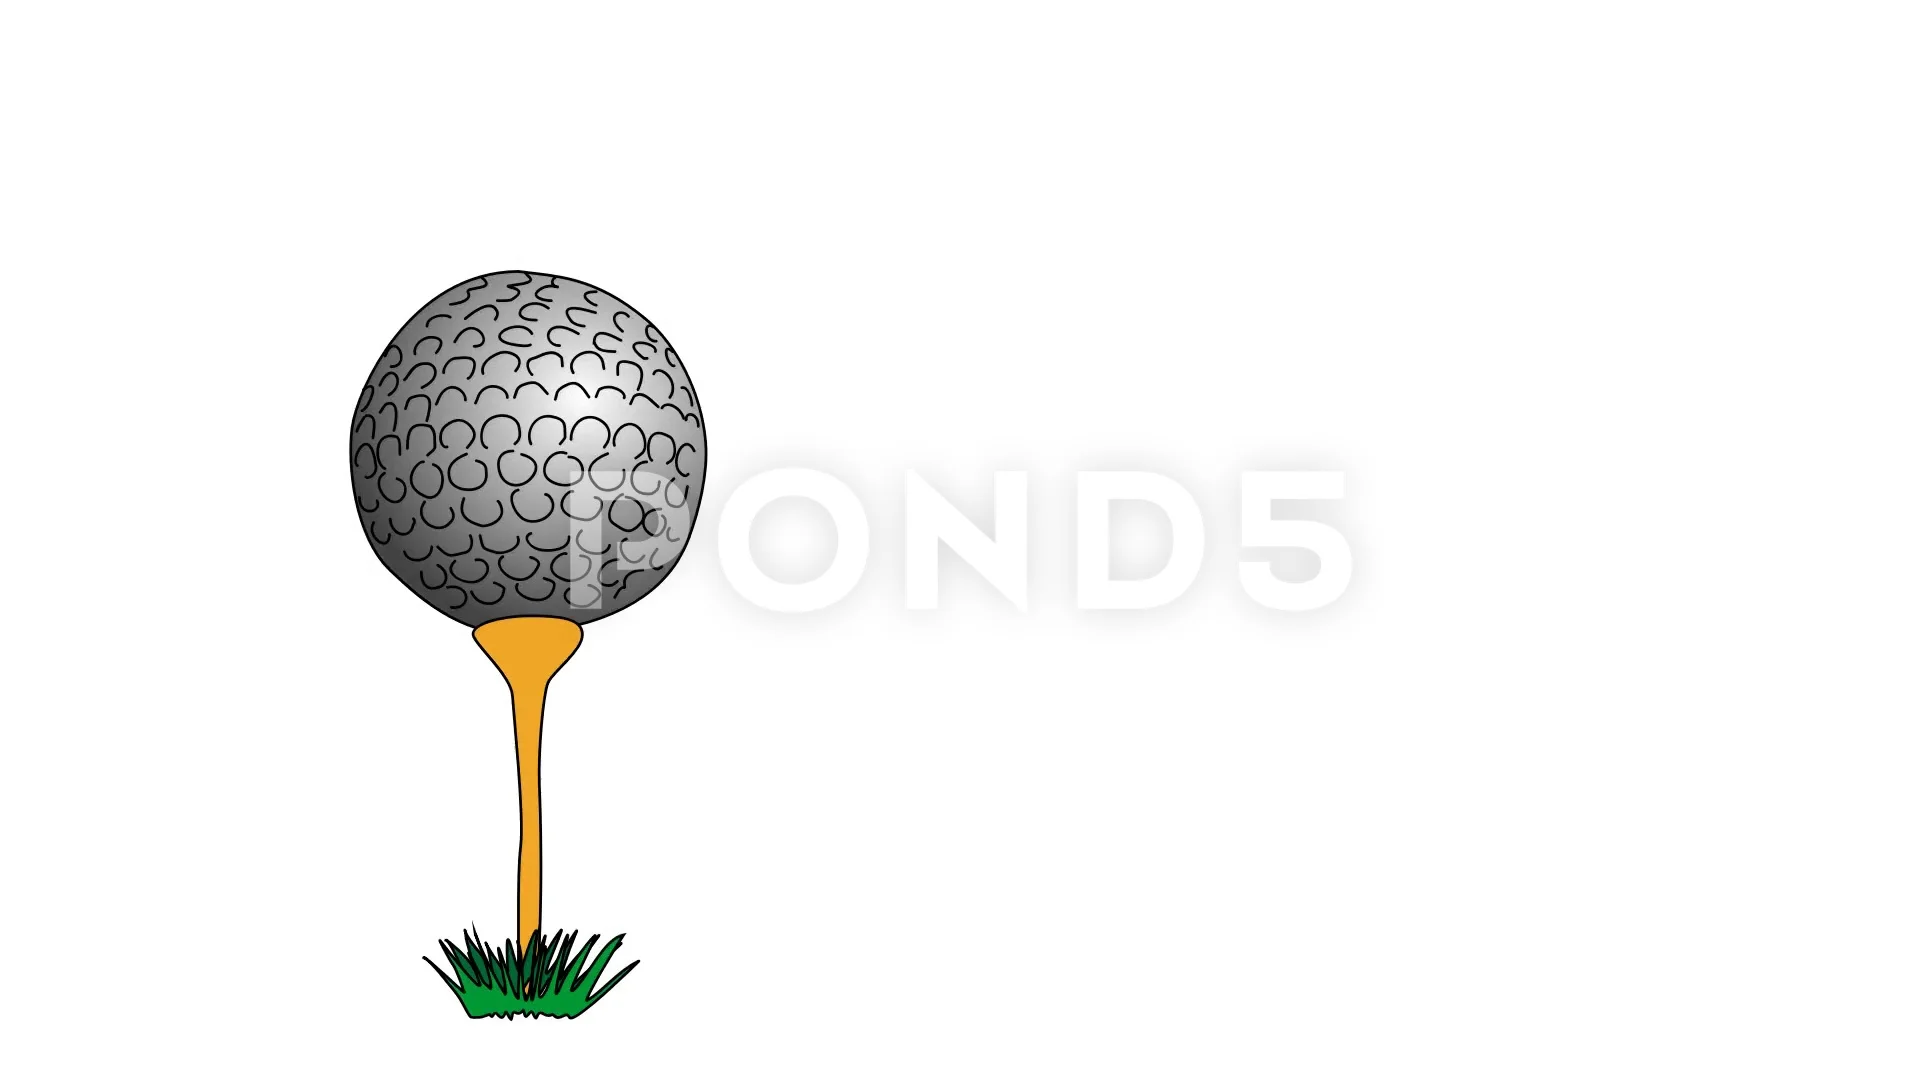 golf ball on tee drawing